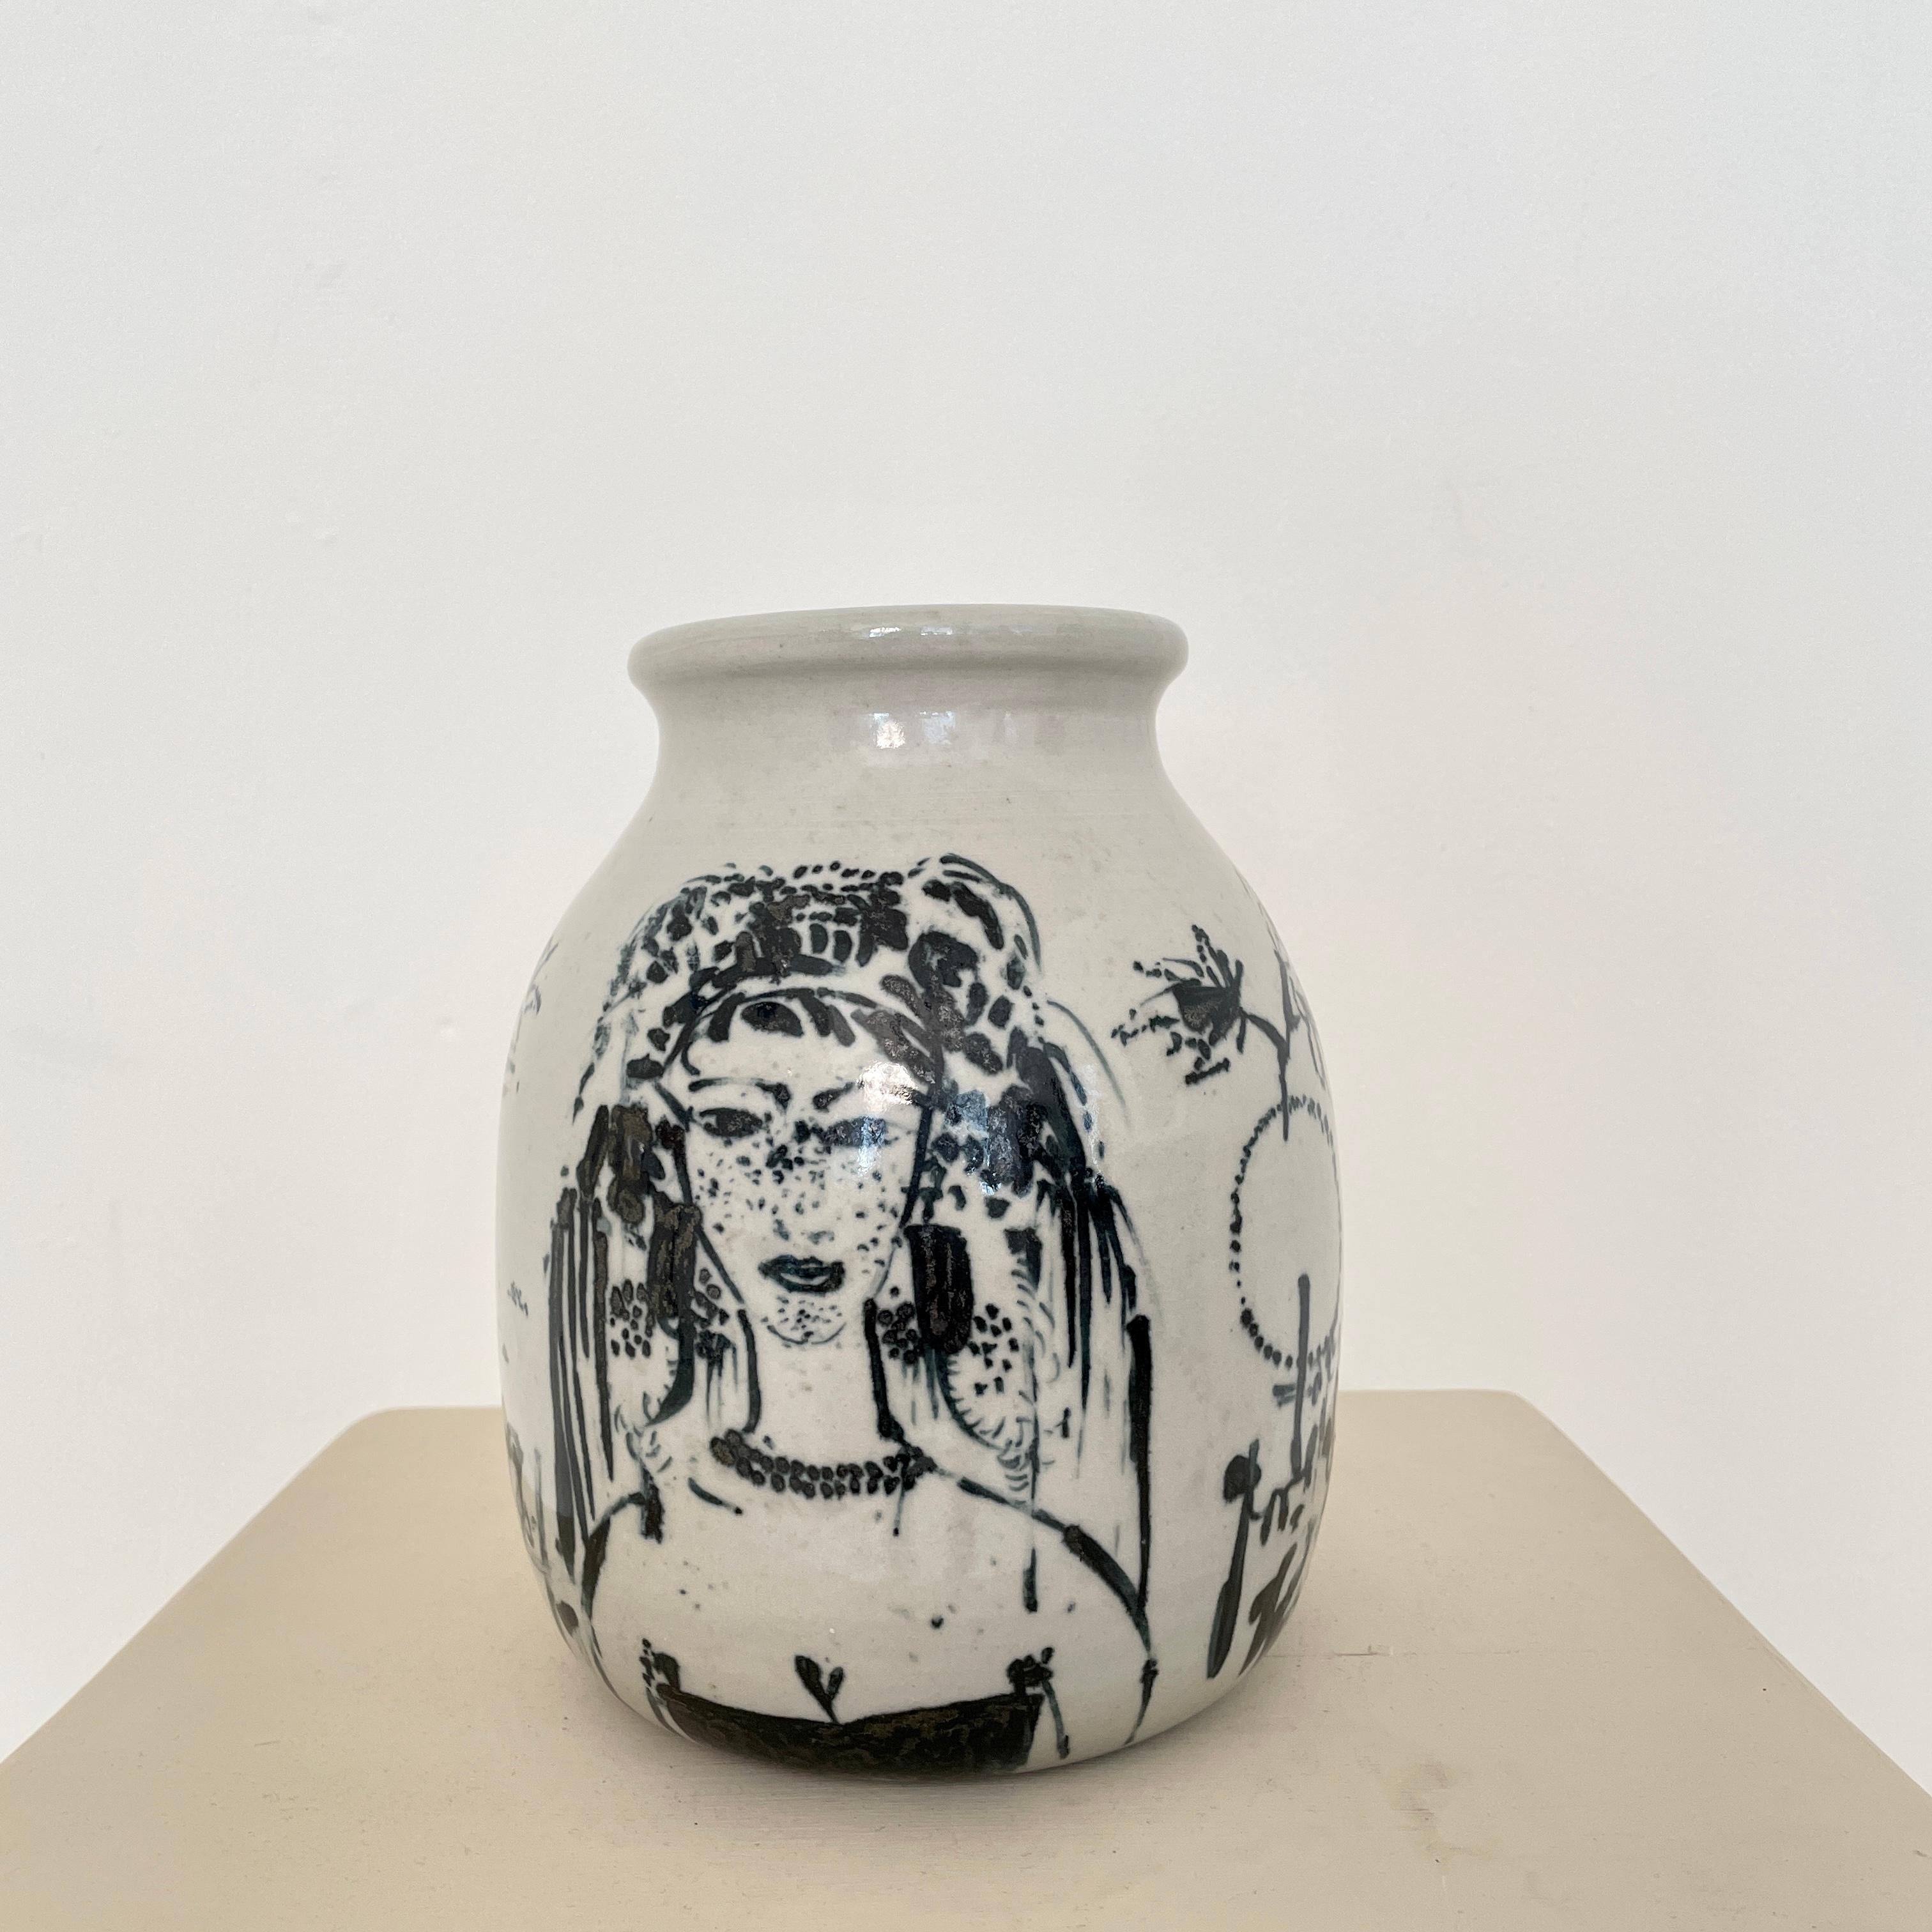 Mid-Century Modern Italian Stoneware Vase, Hand Painted and Glazed in Gray and Black, Around 1970